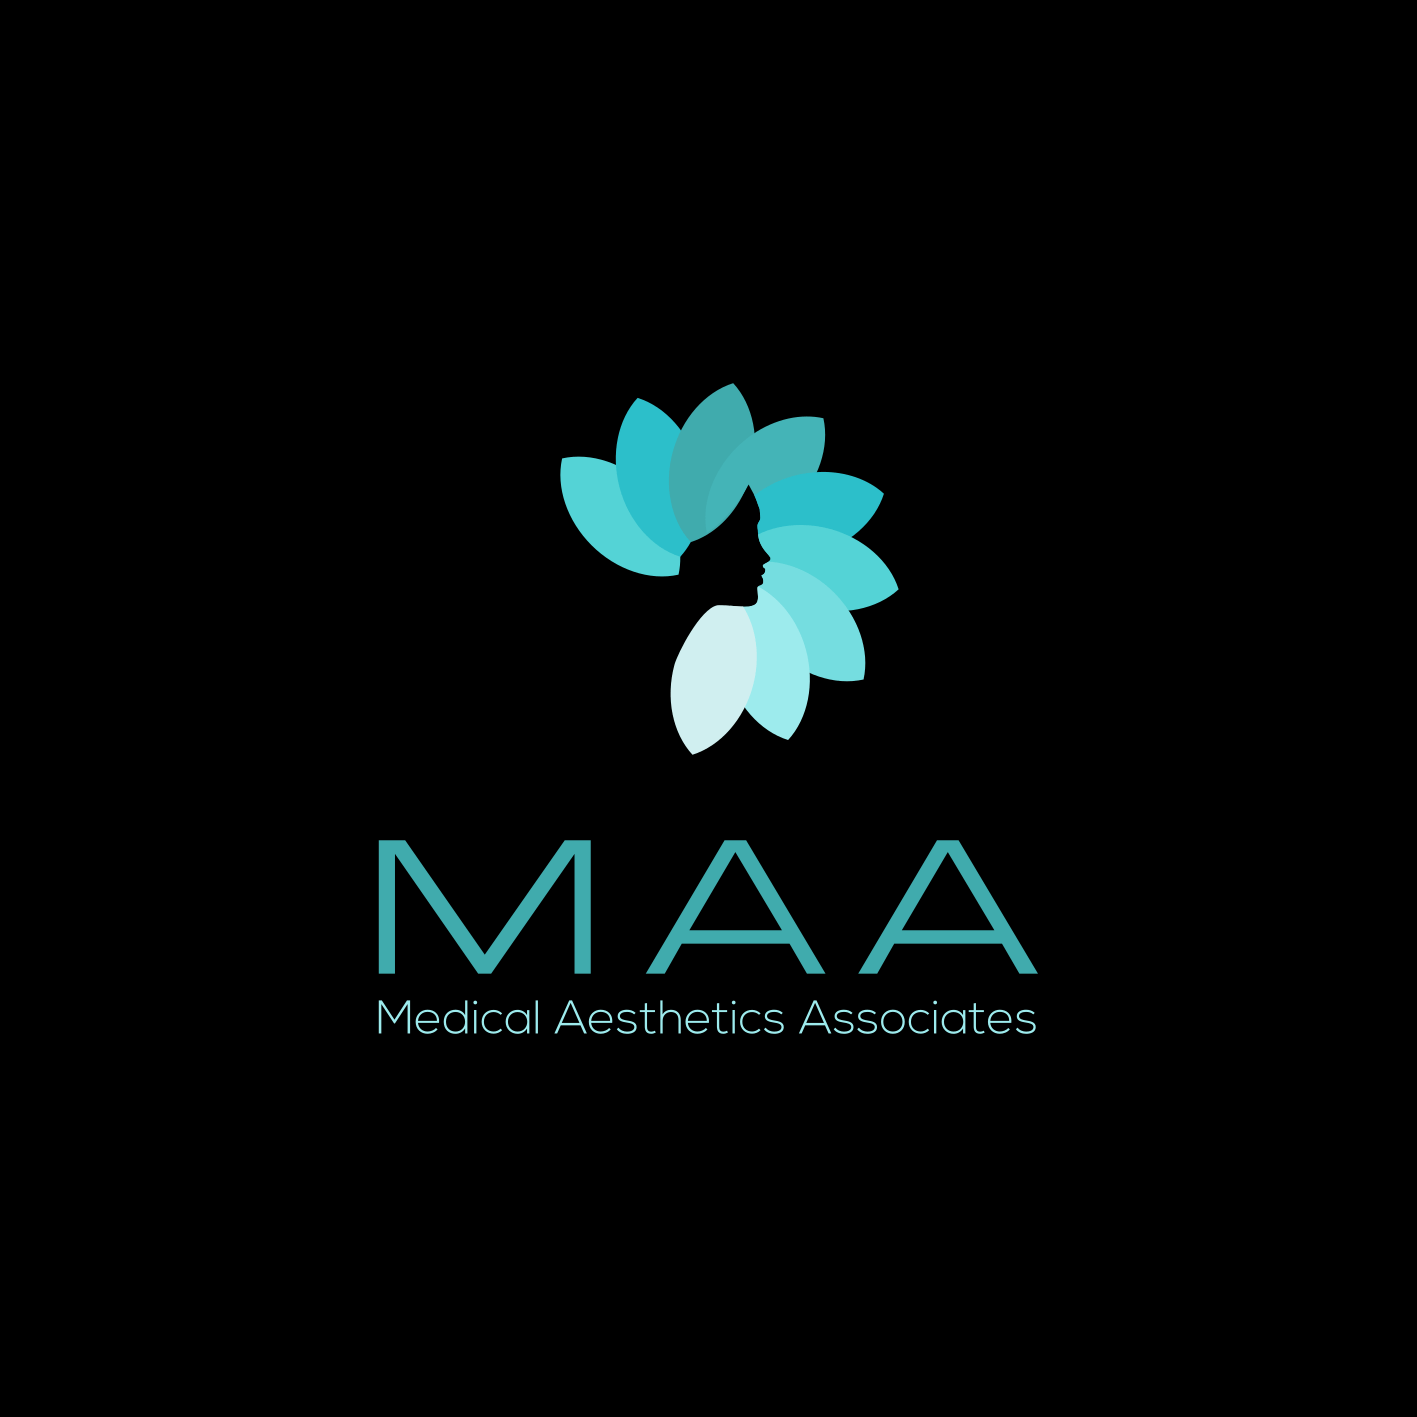 Maa Logo - Serious, Upmarket, Medical Logo Design for Medical Aesthetics ...